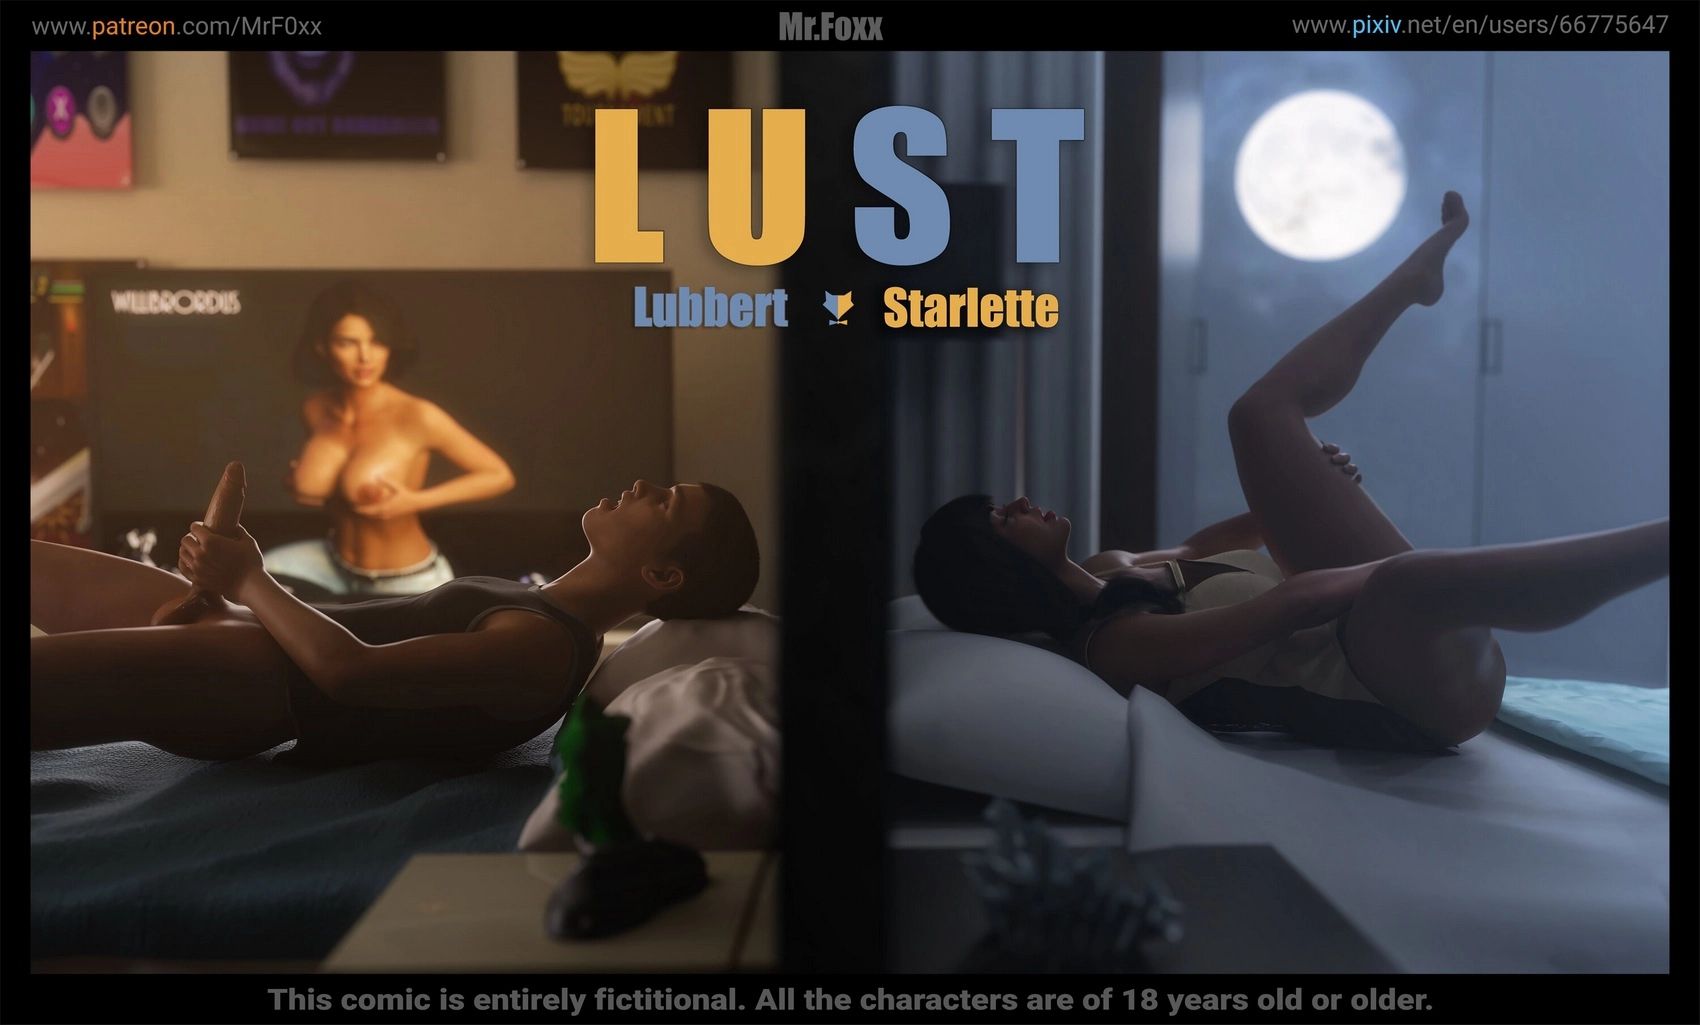 Lust [Mr.FOXX] Porn Comic - AllPornComic